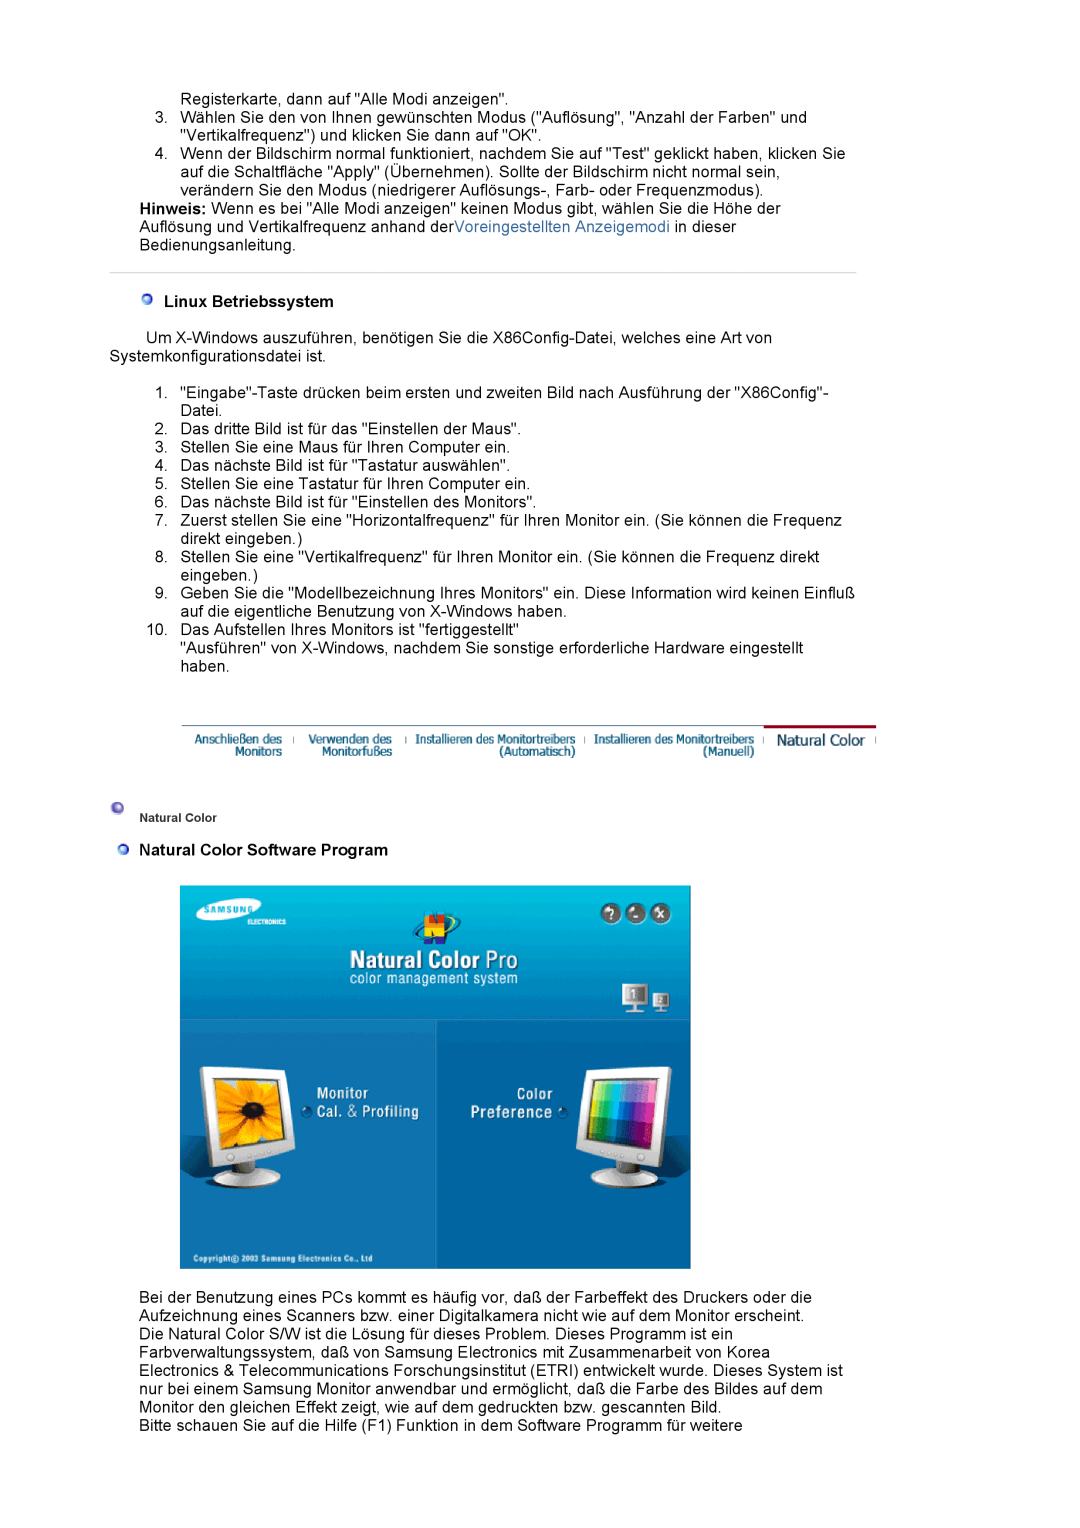 Samsung LS19HAWCSH/EDC, LS19HAWCSQ/EDC manual Linux Betriebssystem, Natural Color Software Program 